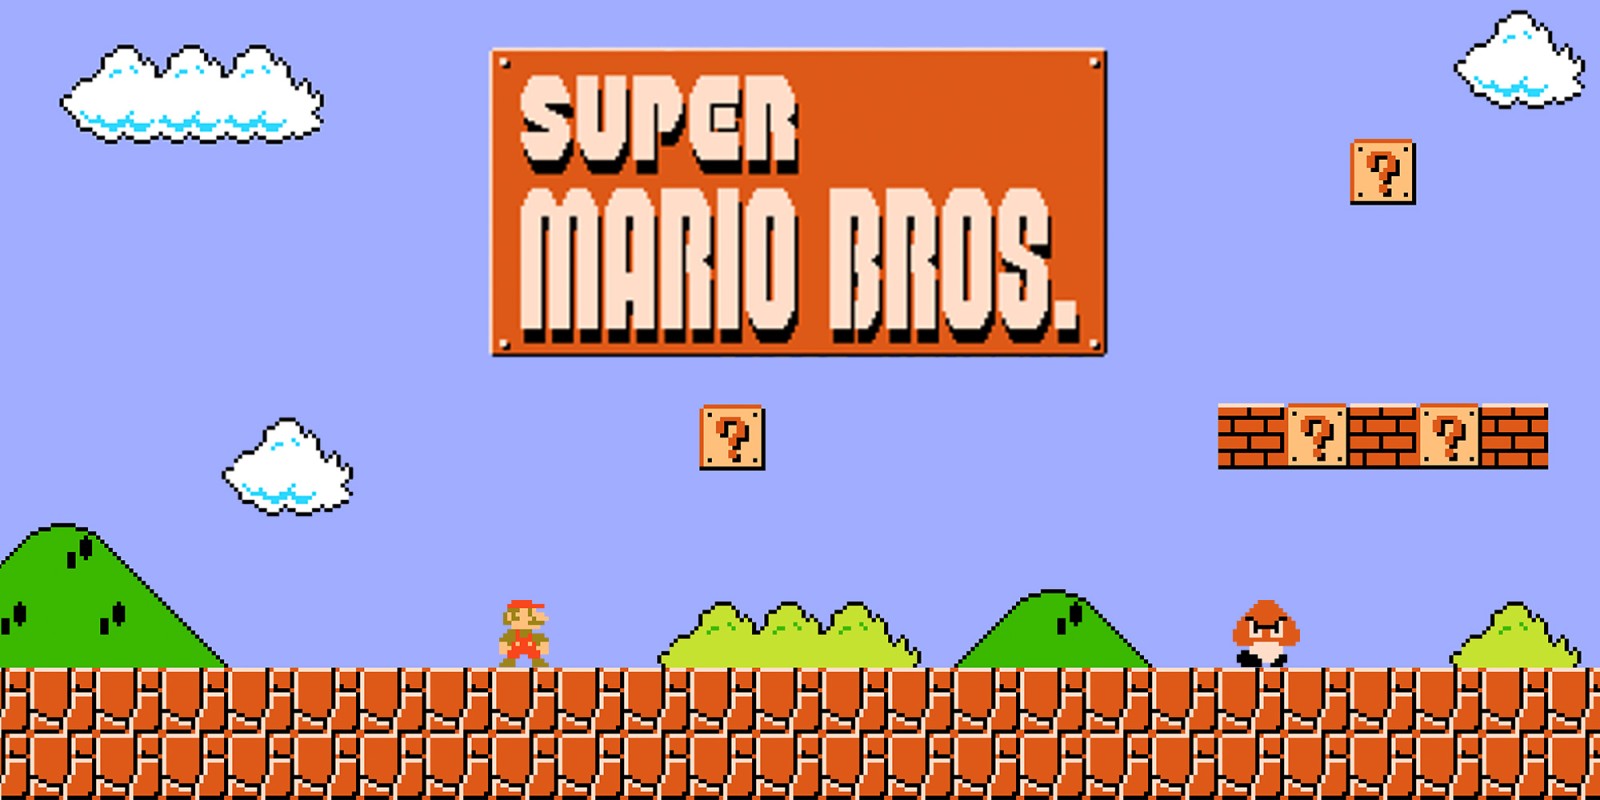 Super Mario Online • Play Super Mario Bros for Free